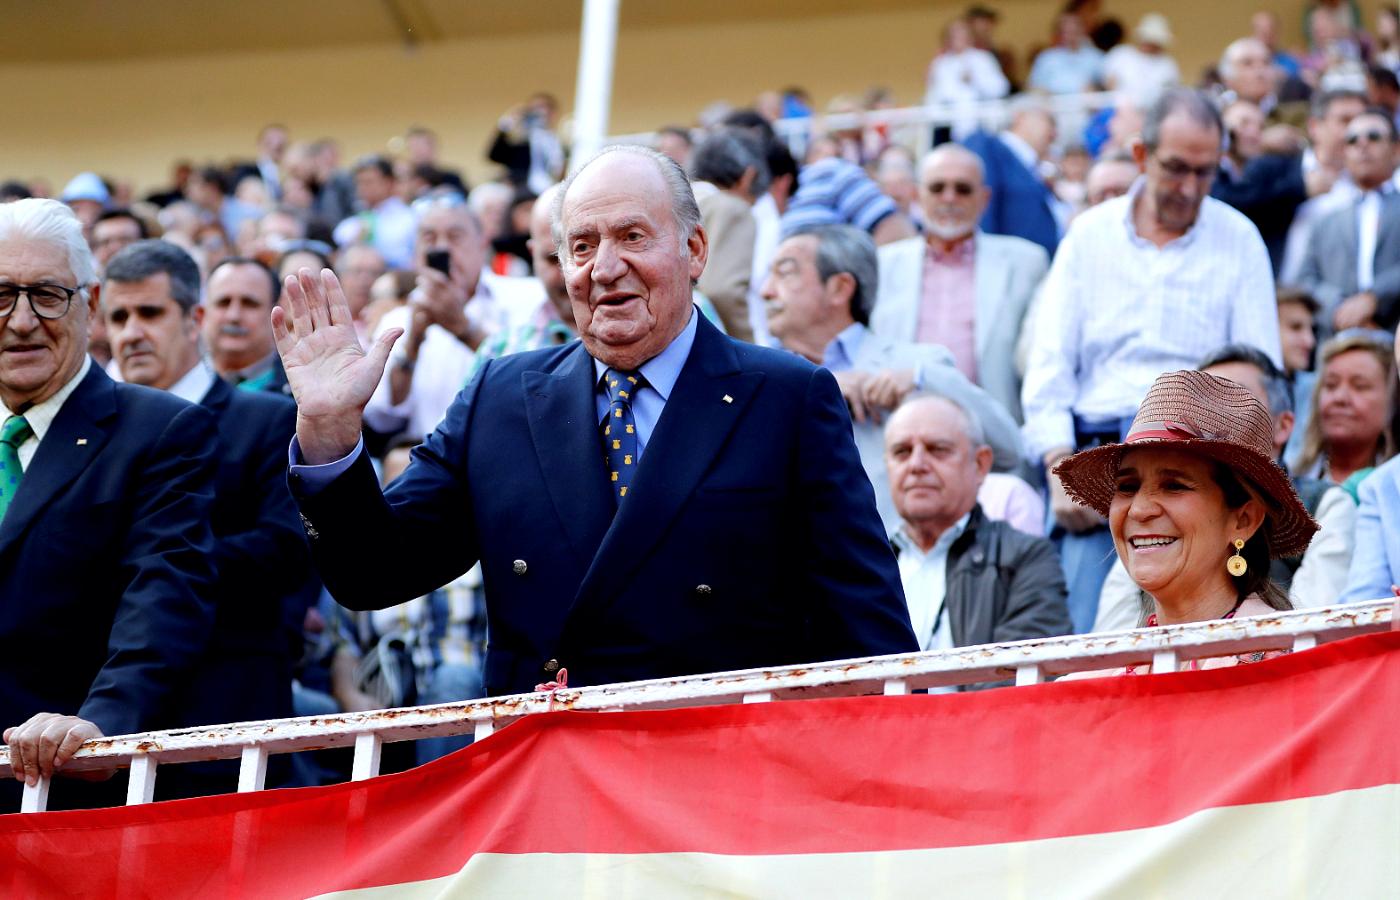 W centrum Juan Carlos, król emeryt Hiszpanii